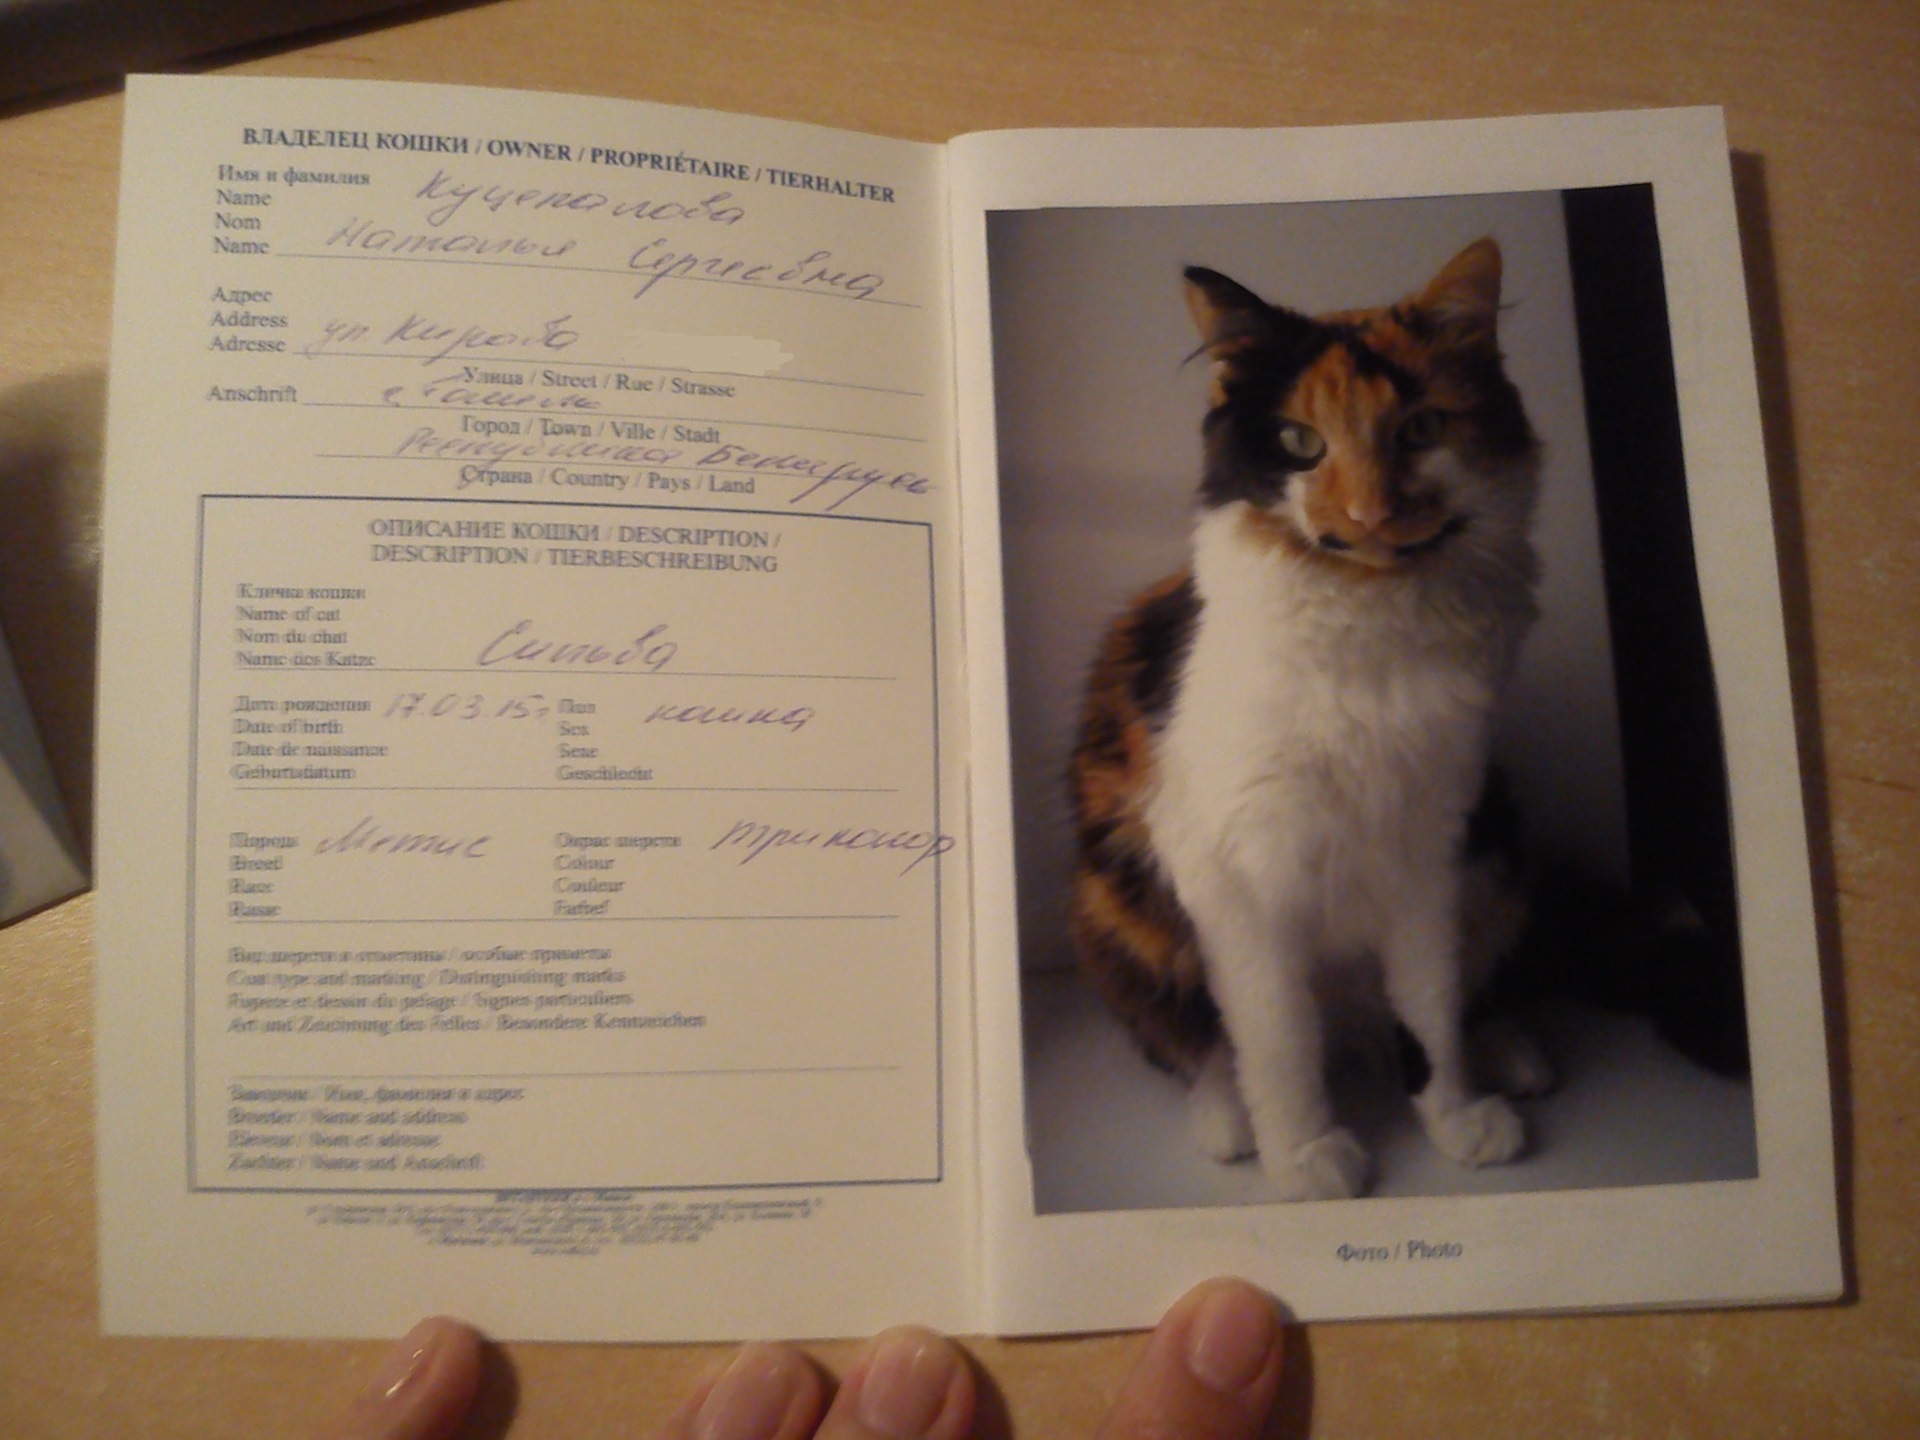 Фото в ветпаспорт для кошки